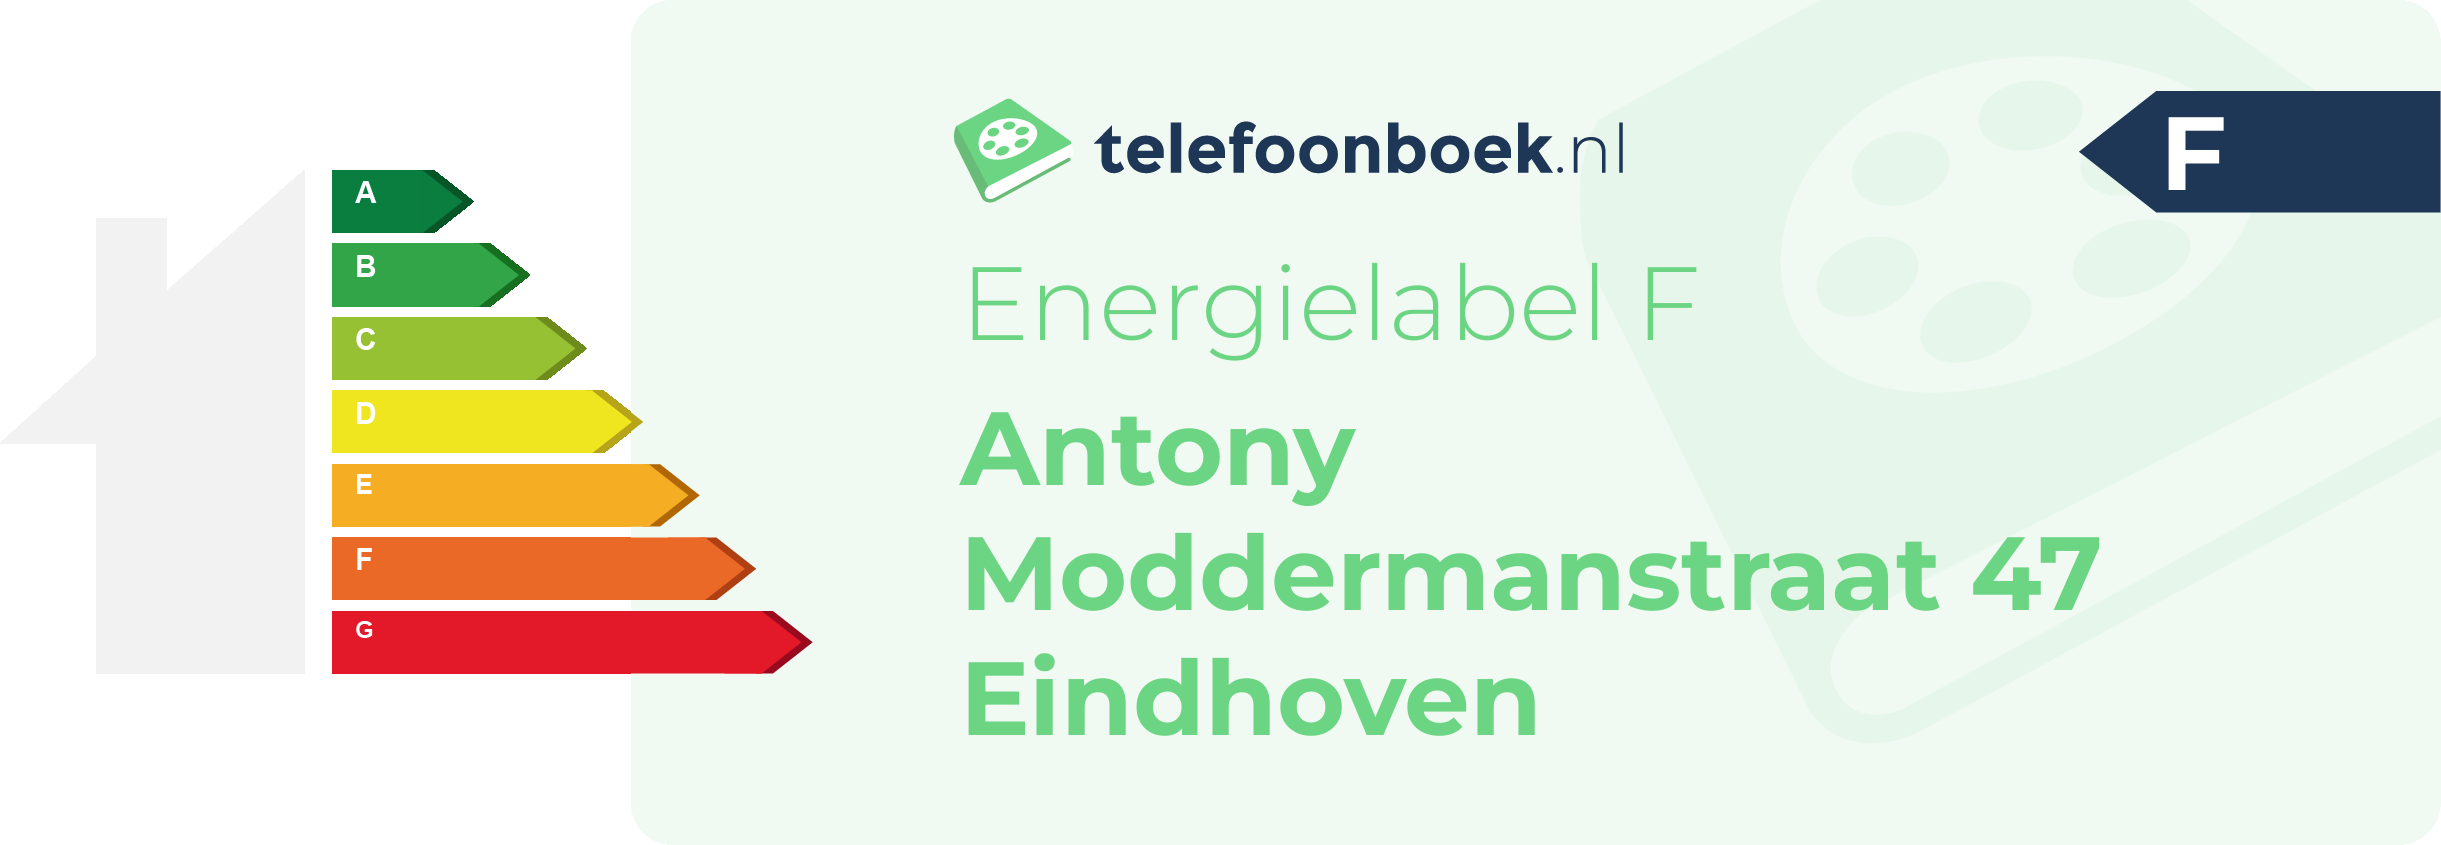 Energielabel Antony Moddermanstraat 47 Eindhoven